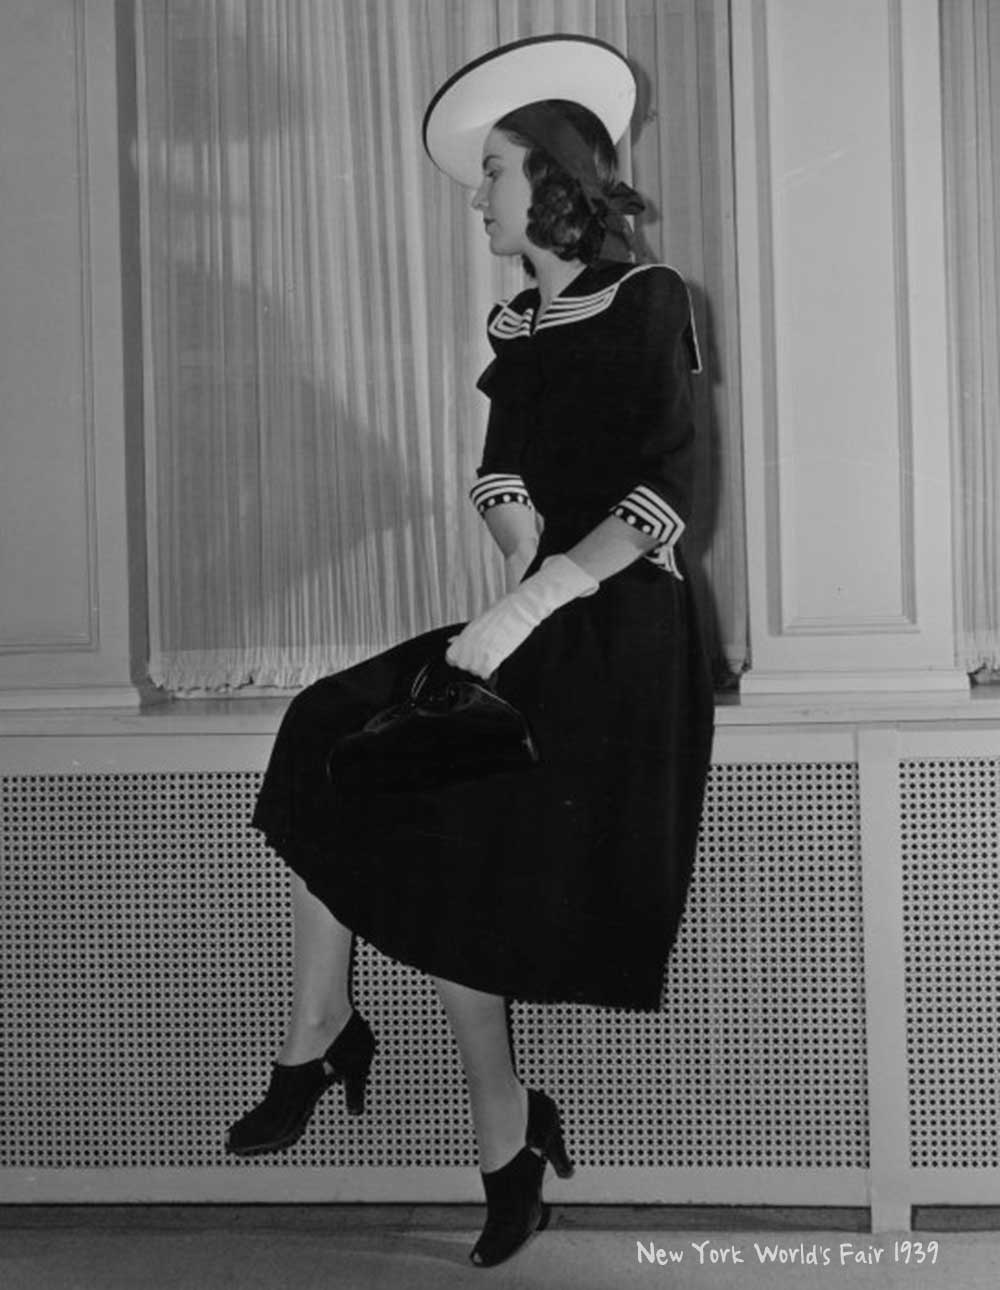 1940s-Fashion-Forecast---dresses